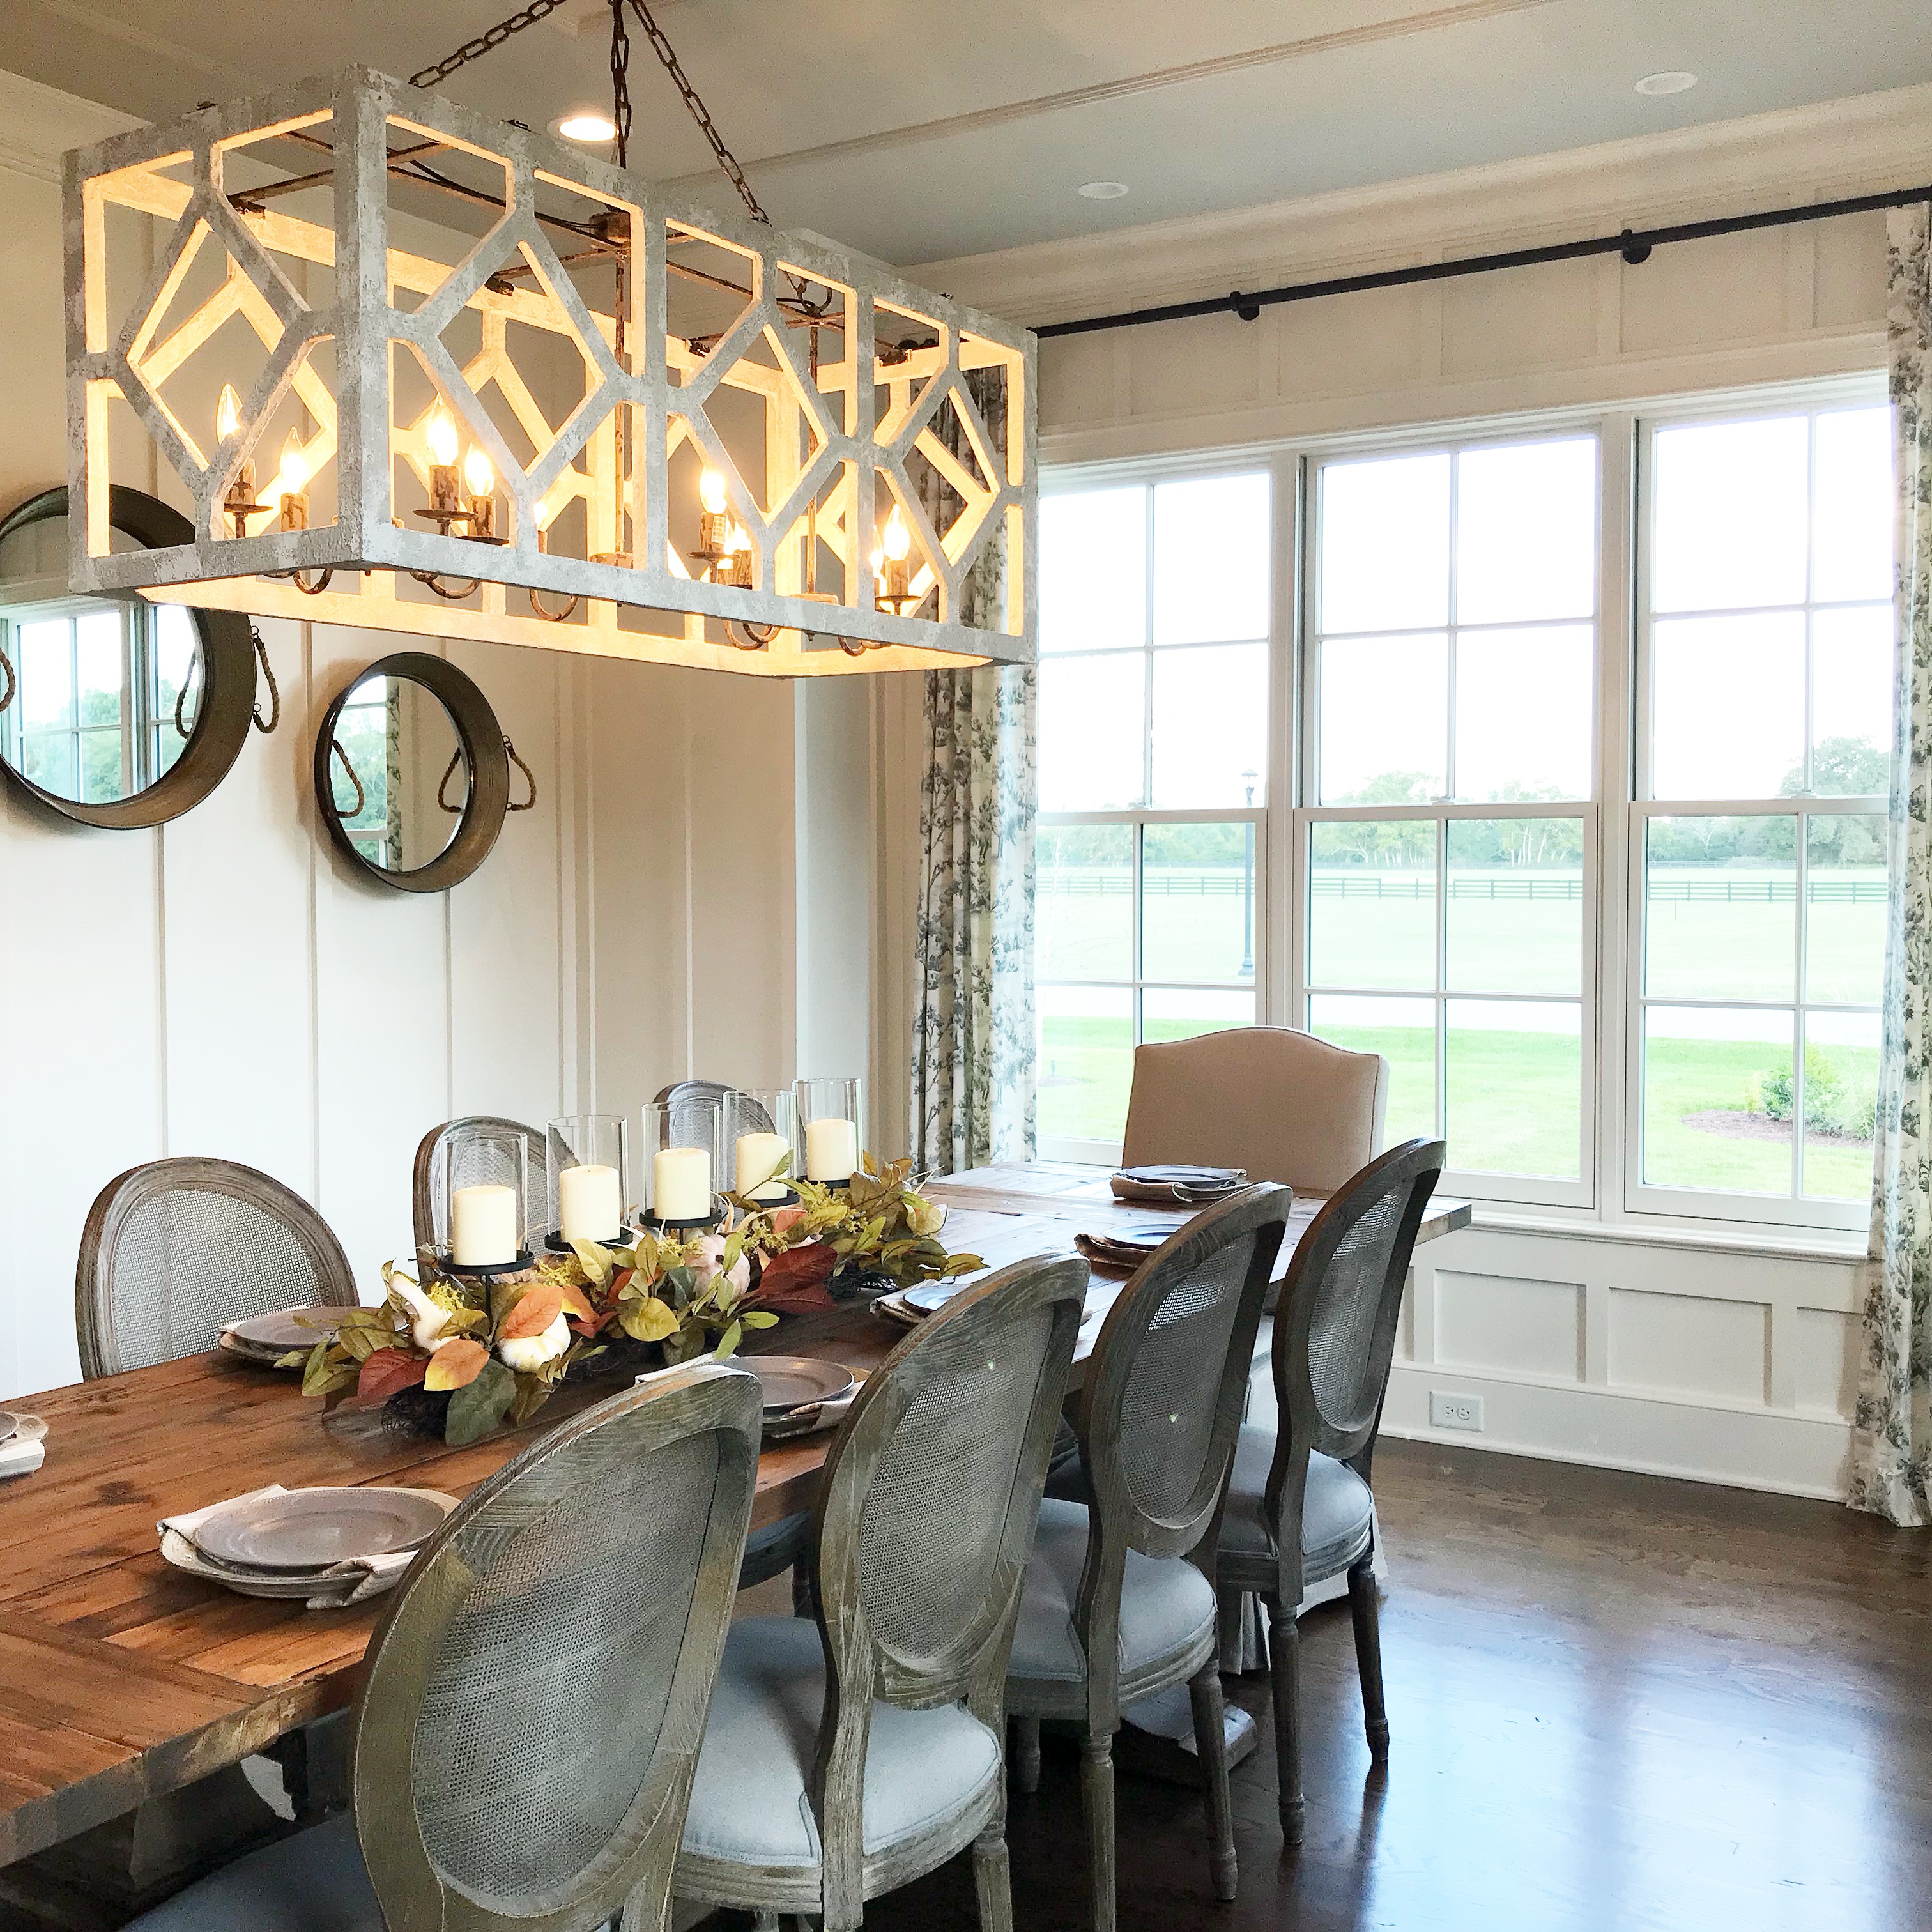 Design A Dining Room - Image to u